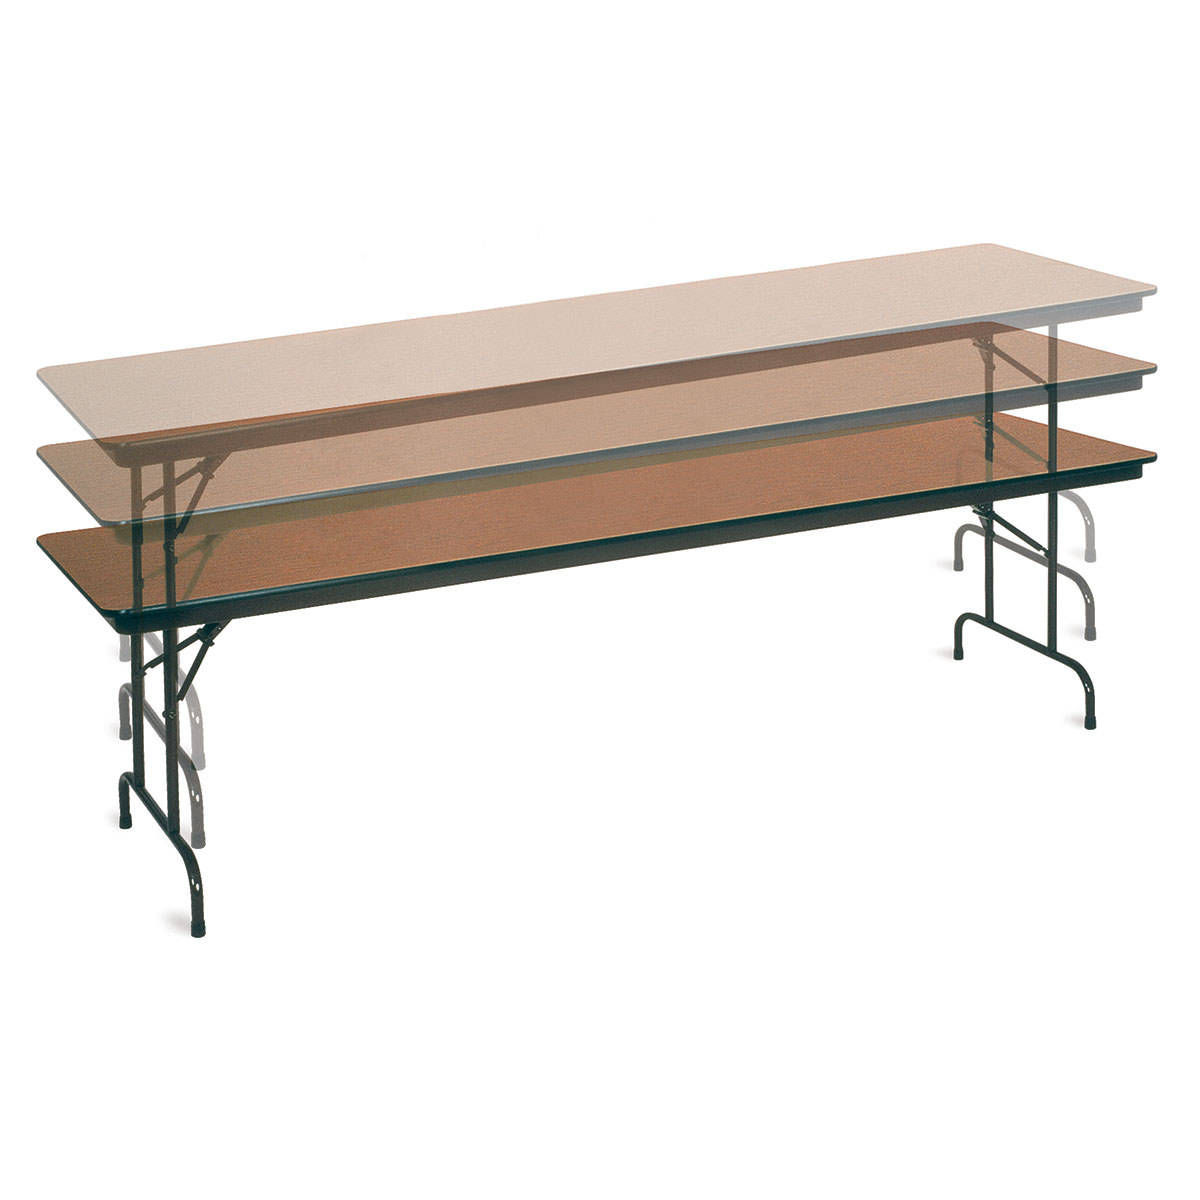 Budget-Priced Folding Table - 36' x 96', Walnut, Adjustable